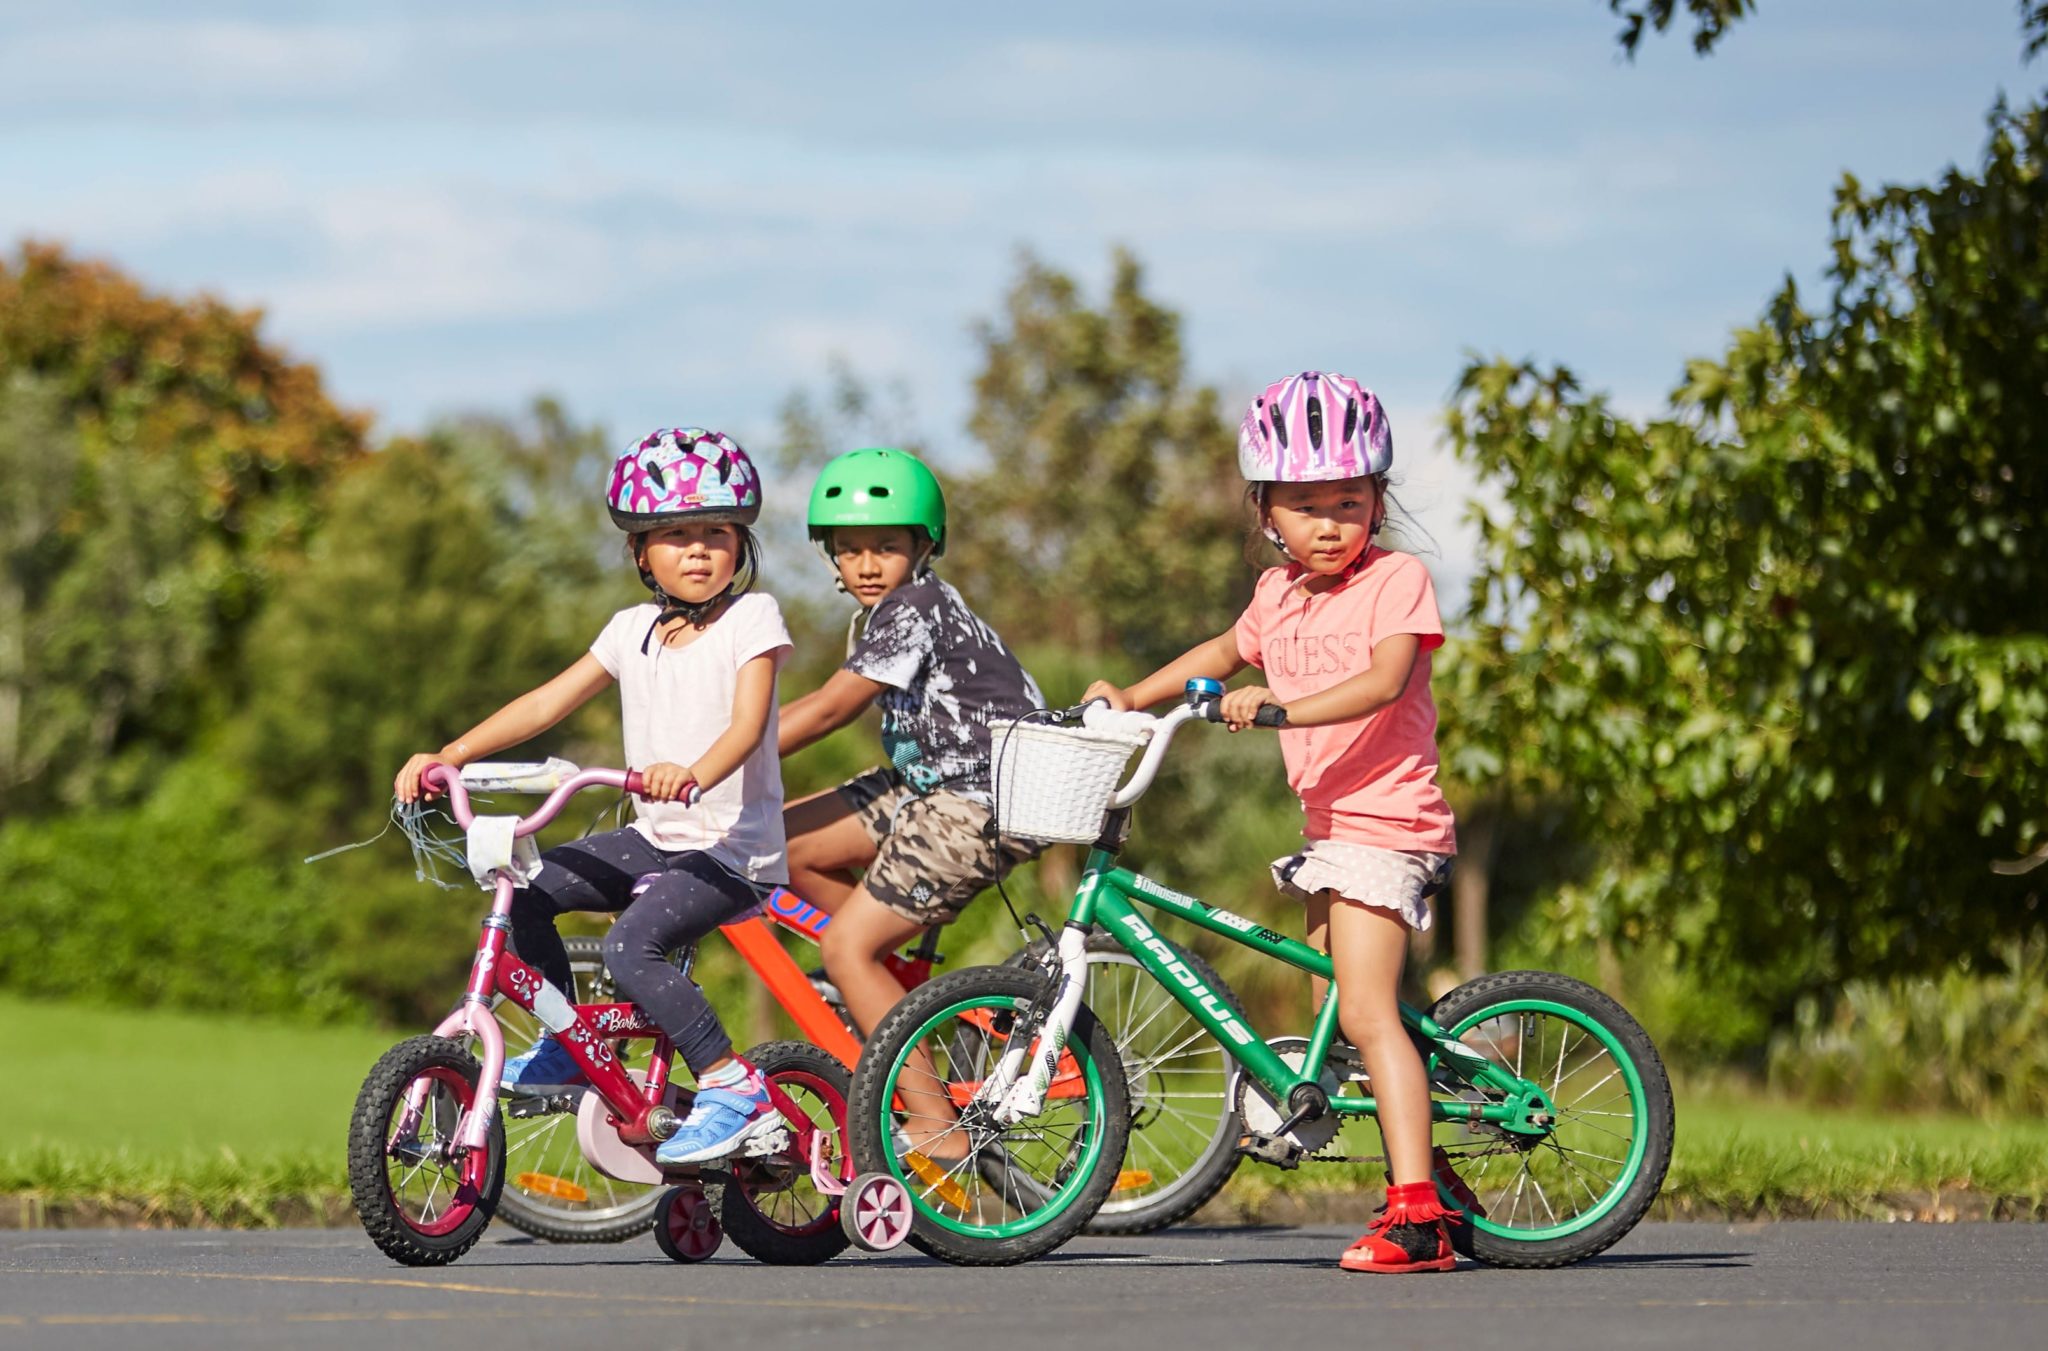 The children ride bikes. Children riding Bicycles. Friends teens and Kids Ride Bikes.